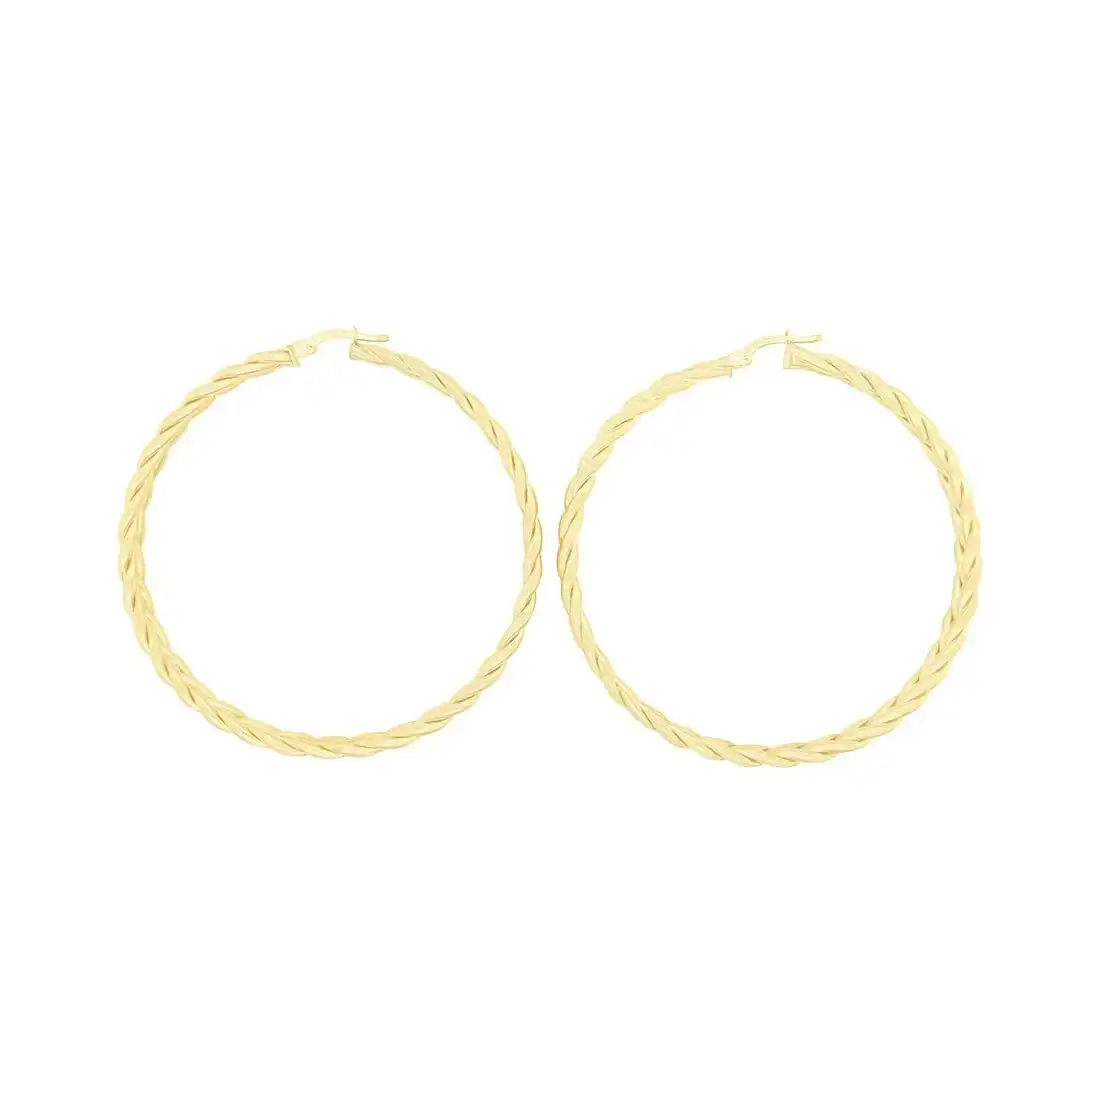 Double Twist Hoop Earrings in  9ct Yellow Gold Silver Infused